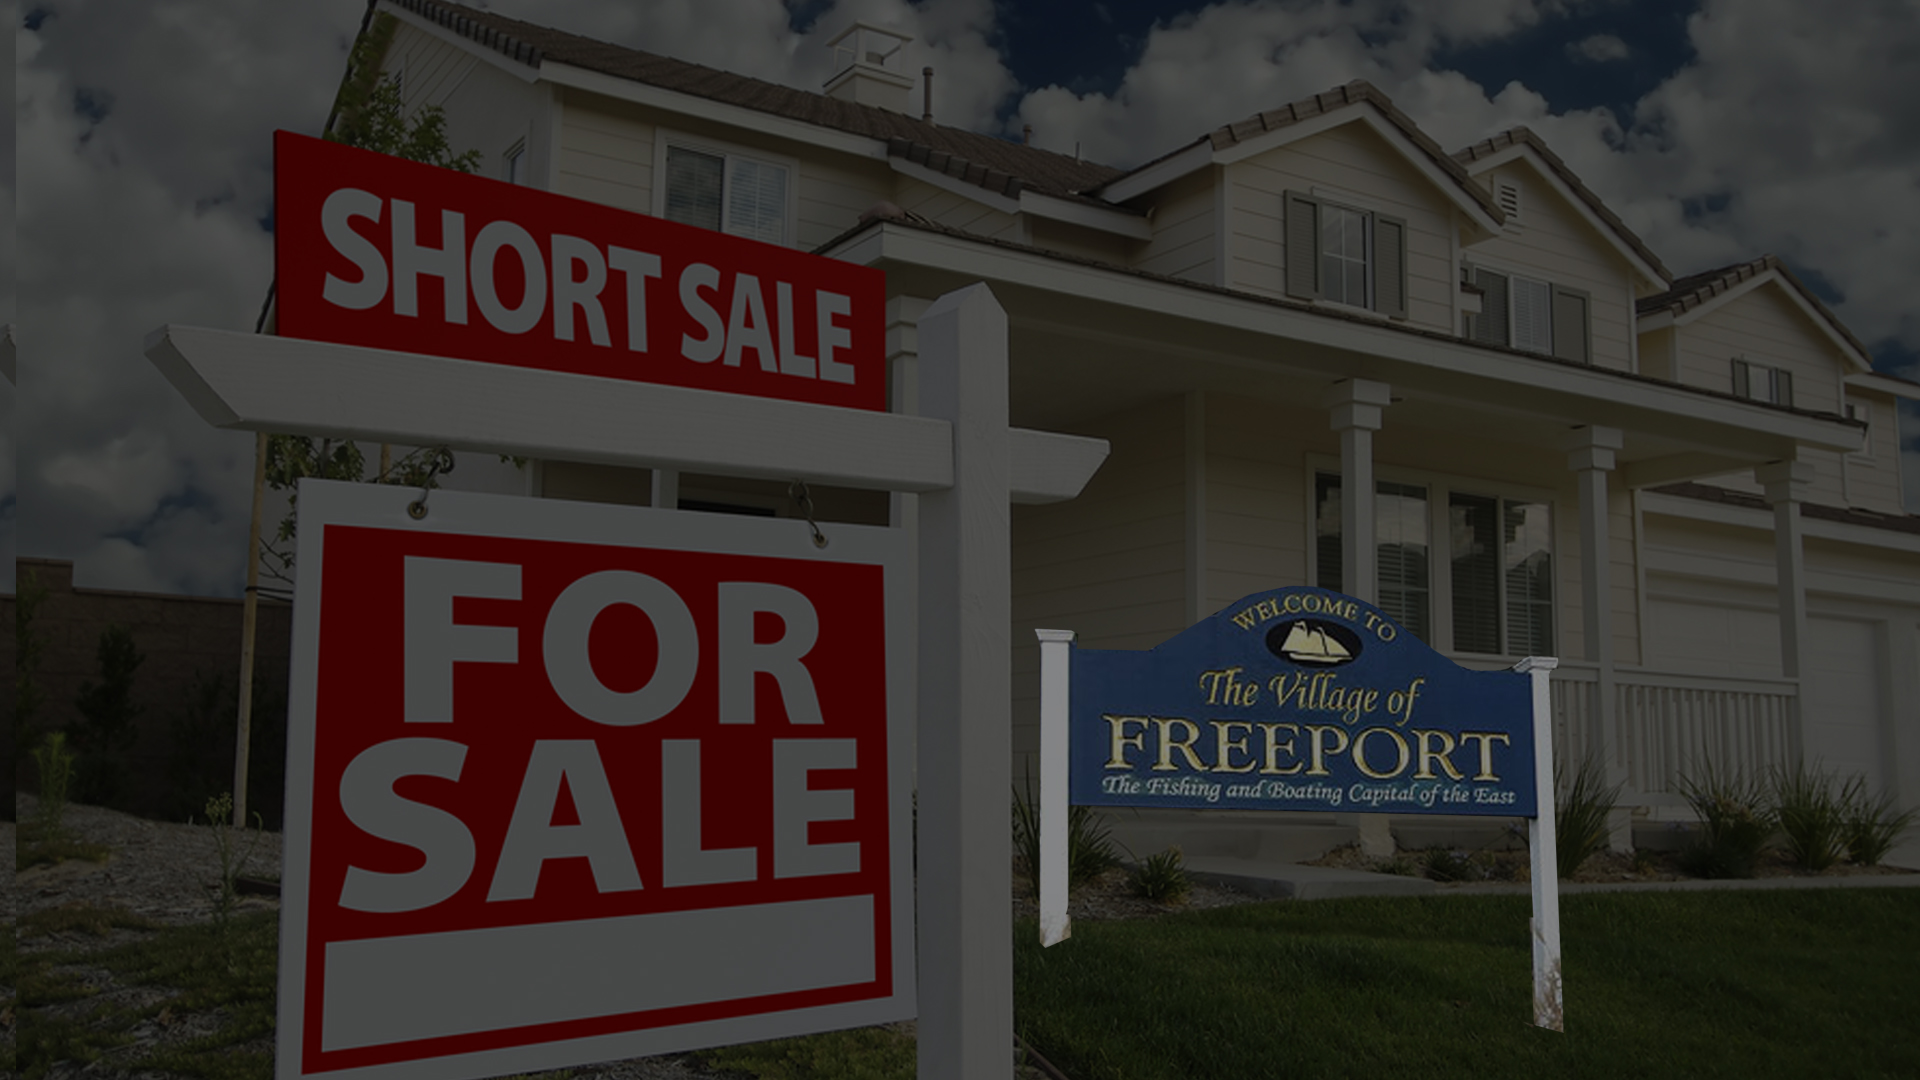 Short Sale Real Estate | Freeport, Long Island, NY | ResolutionRealtyLI.com